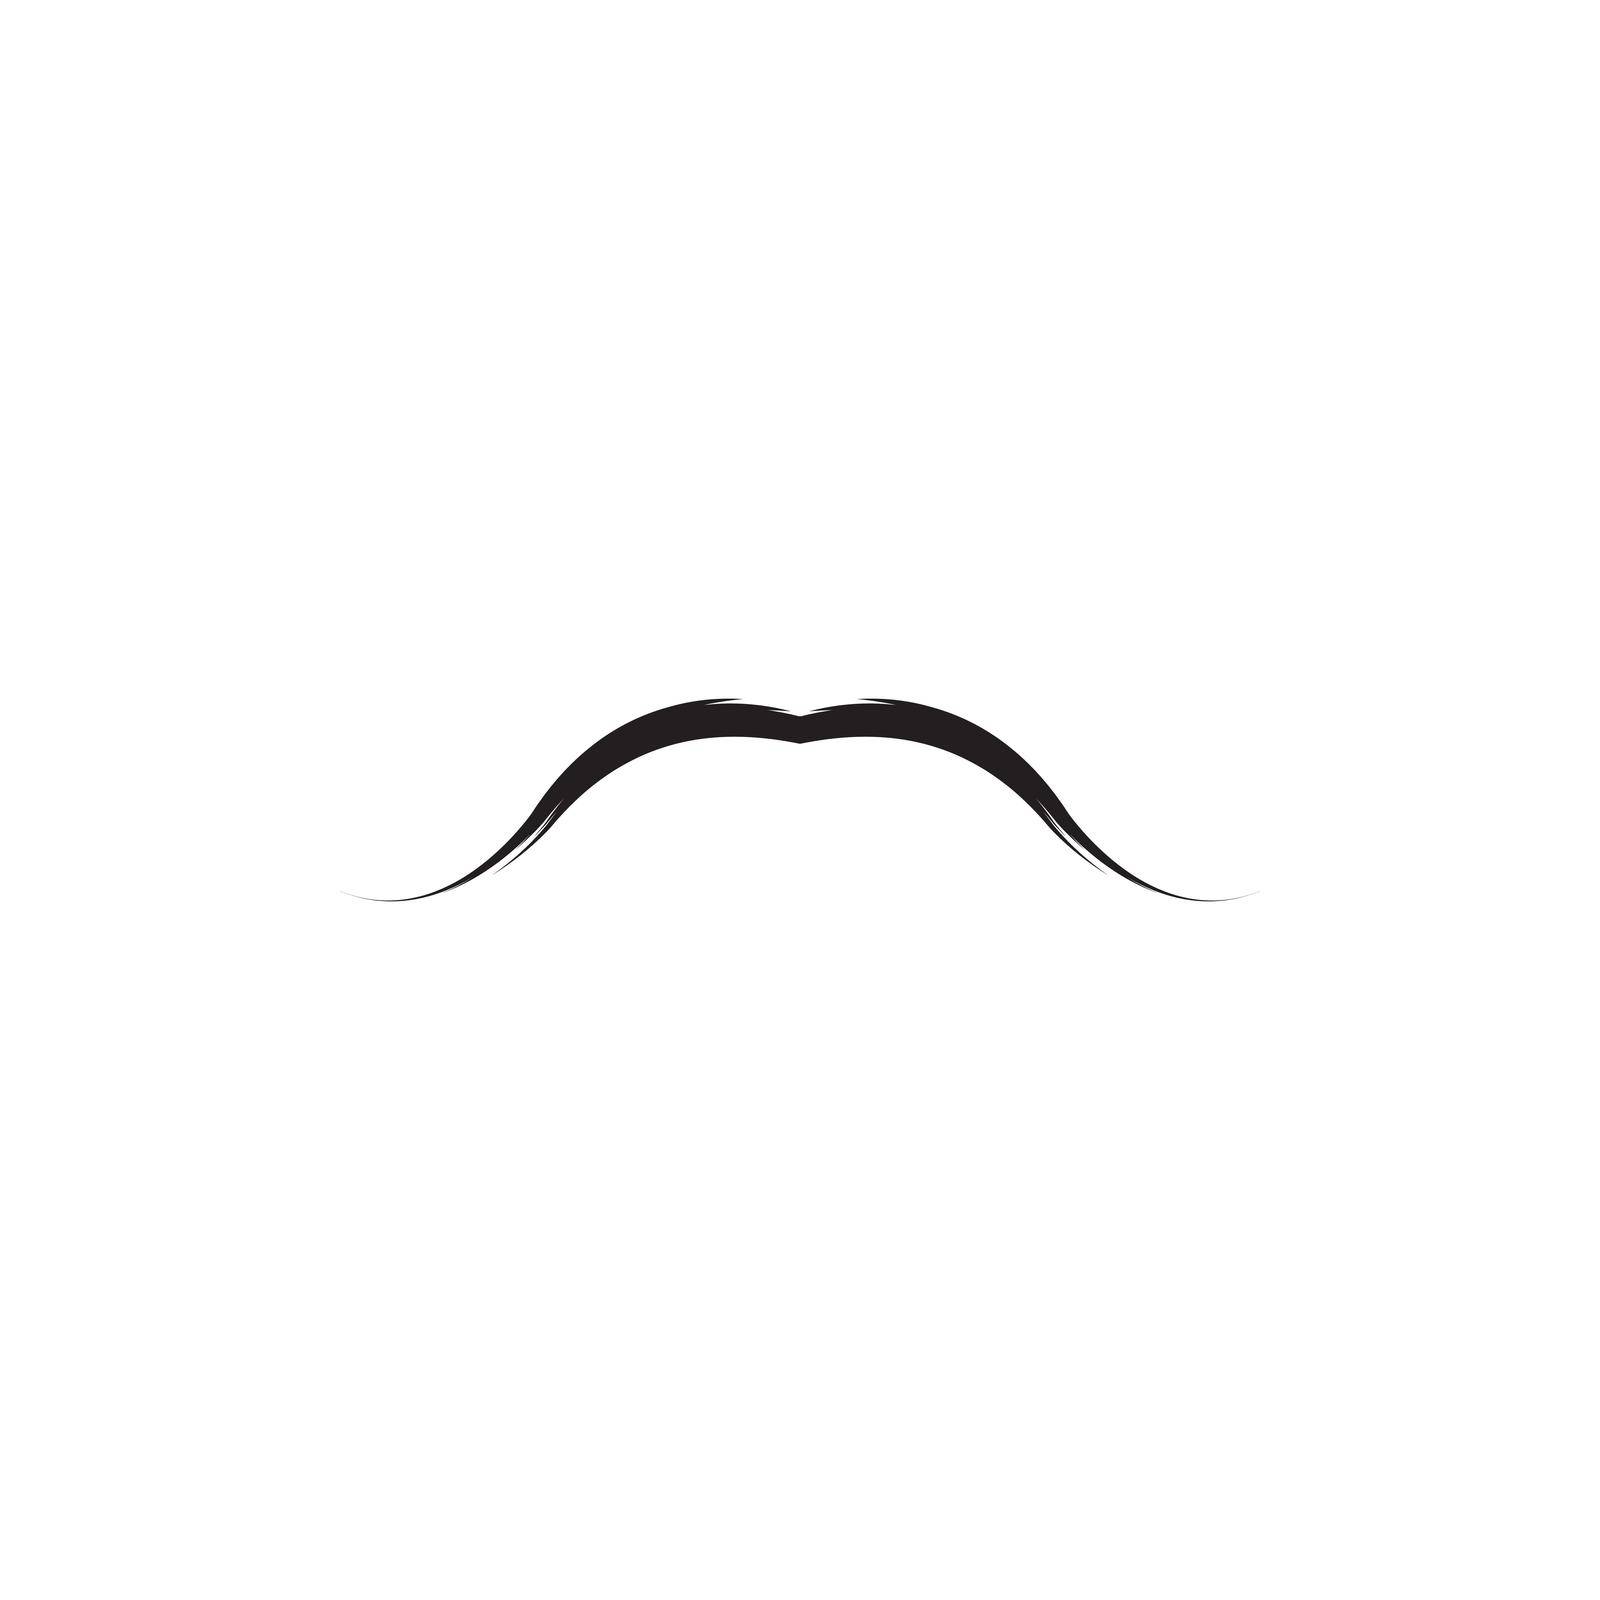 Mustache icon vector by Amin89